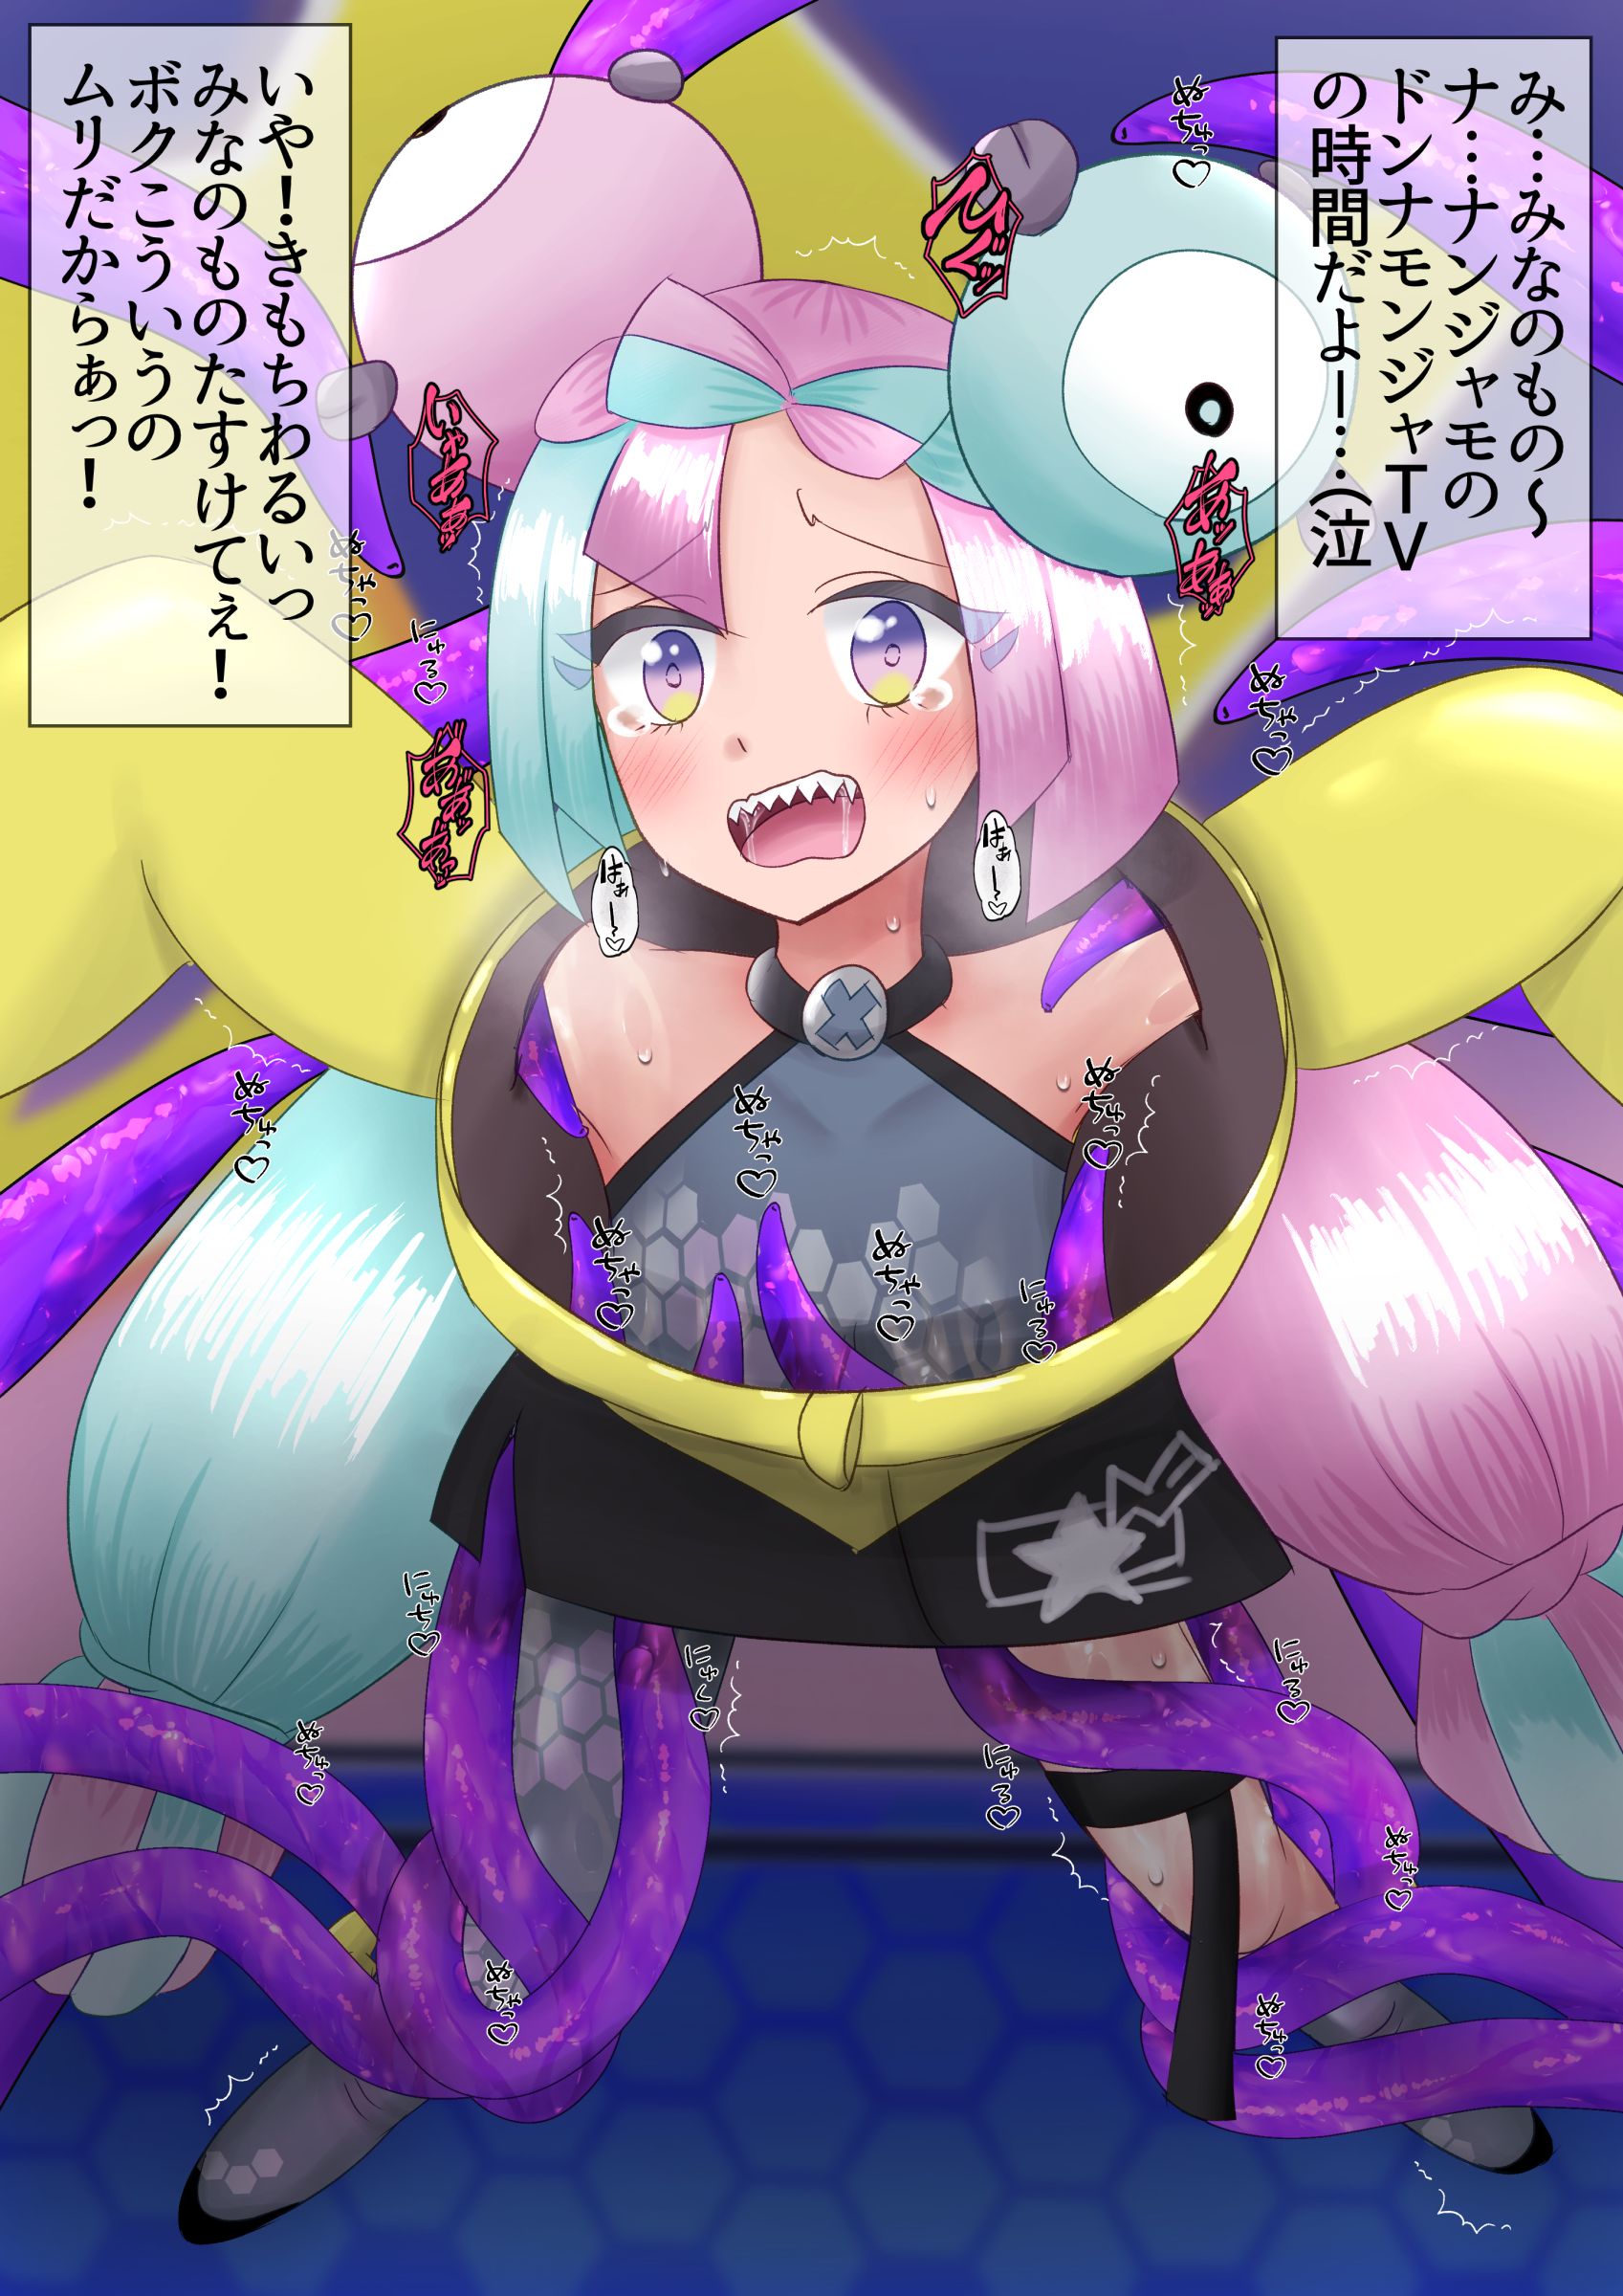 【Nanjamo-chan】Secondary erotic image of Pokémon Violet Scarlet's new gym leader Nanjamo-chan 72